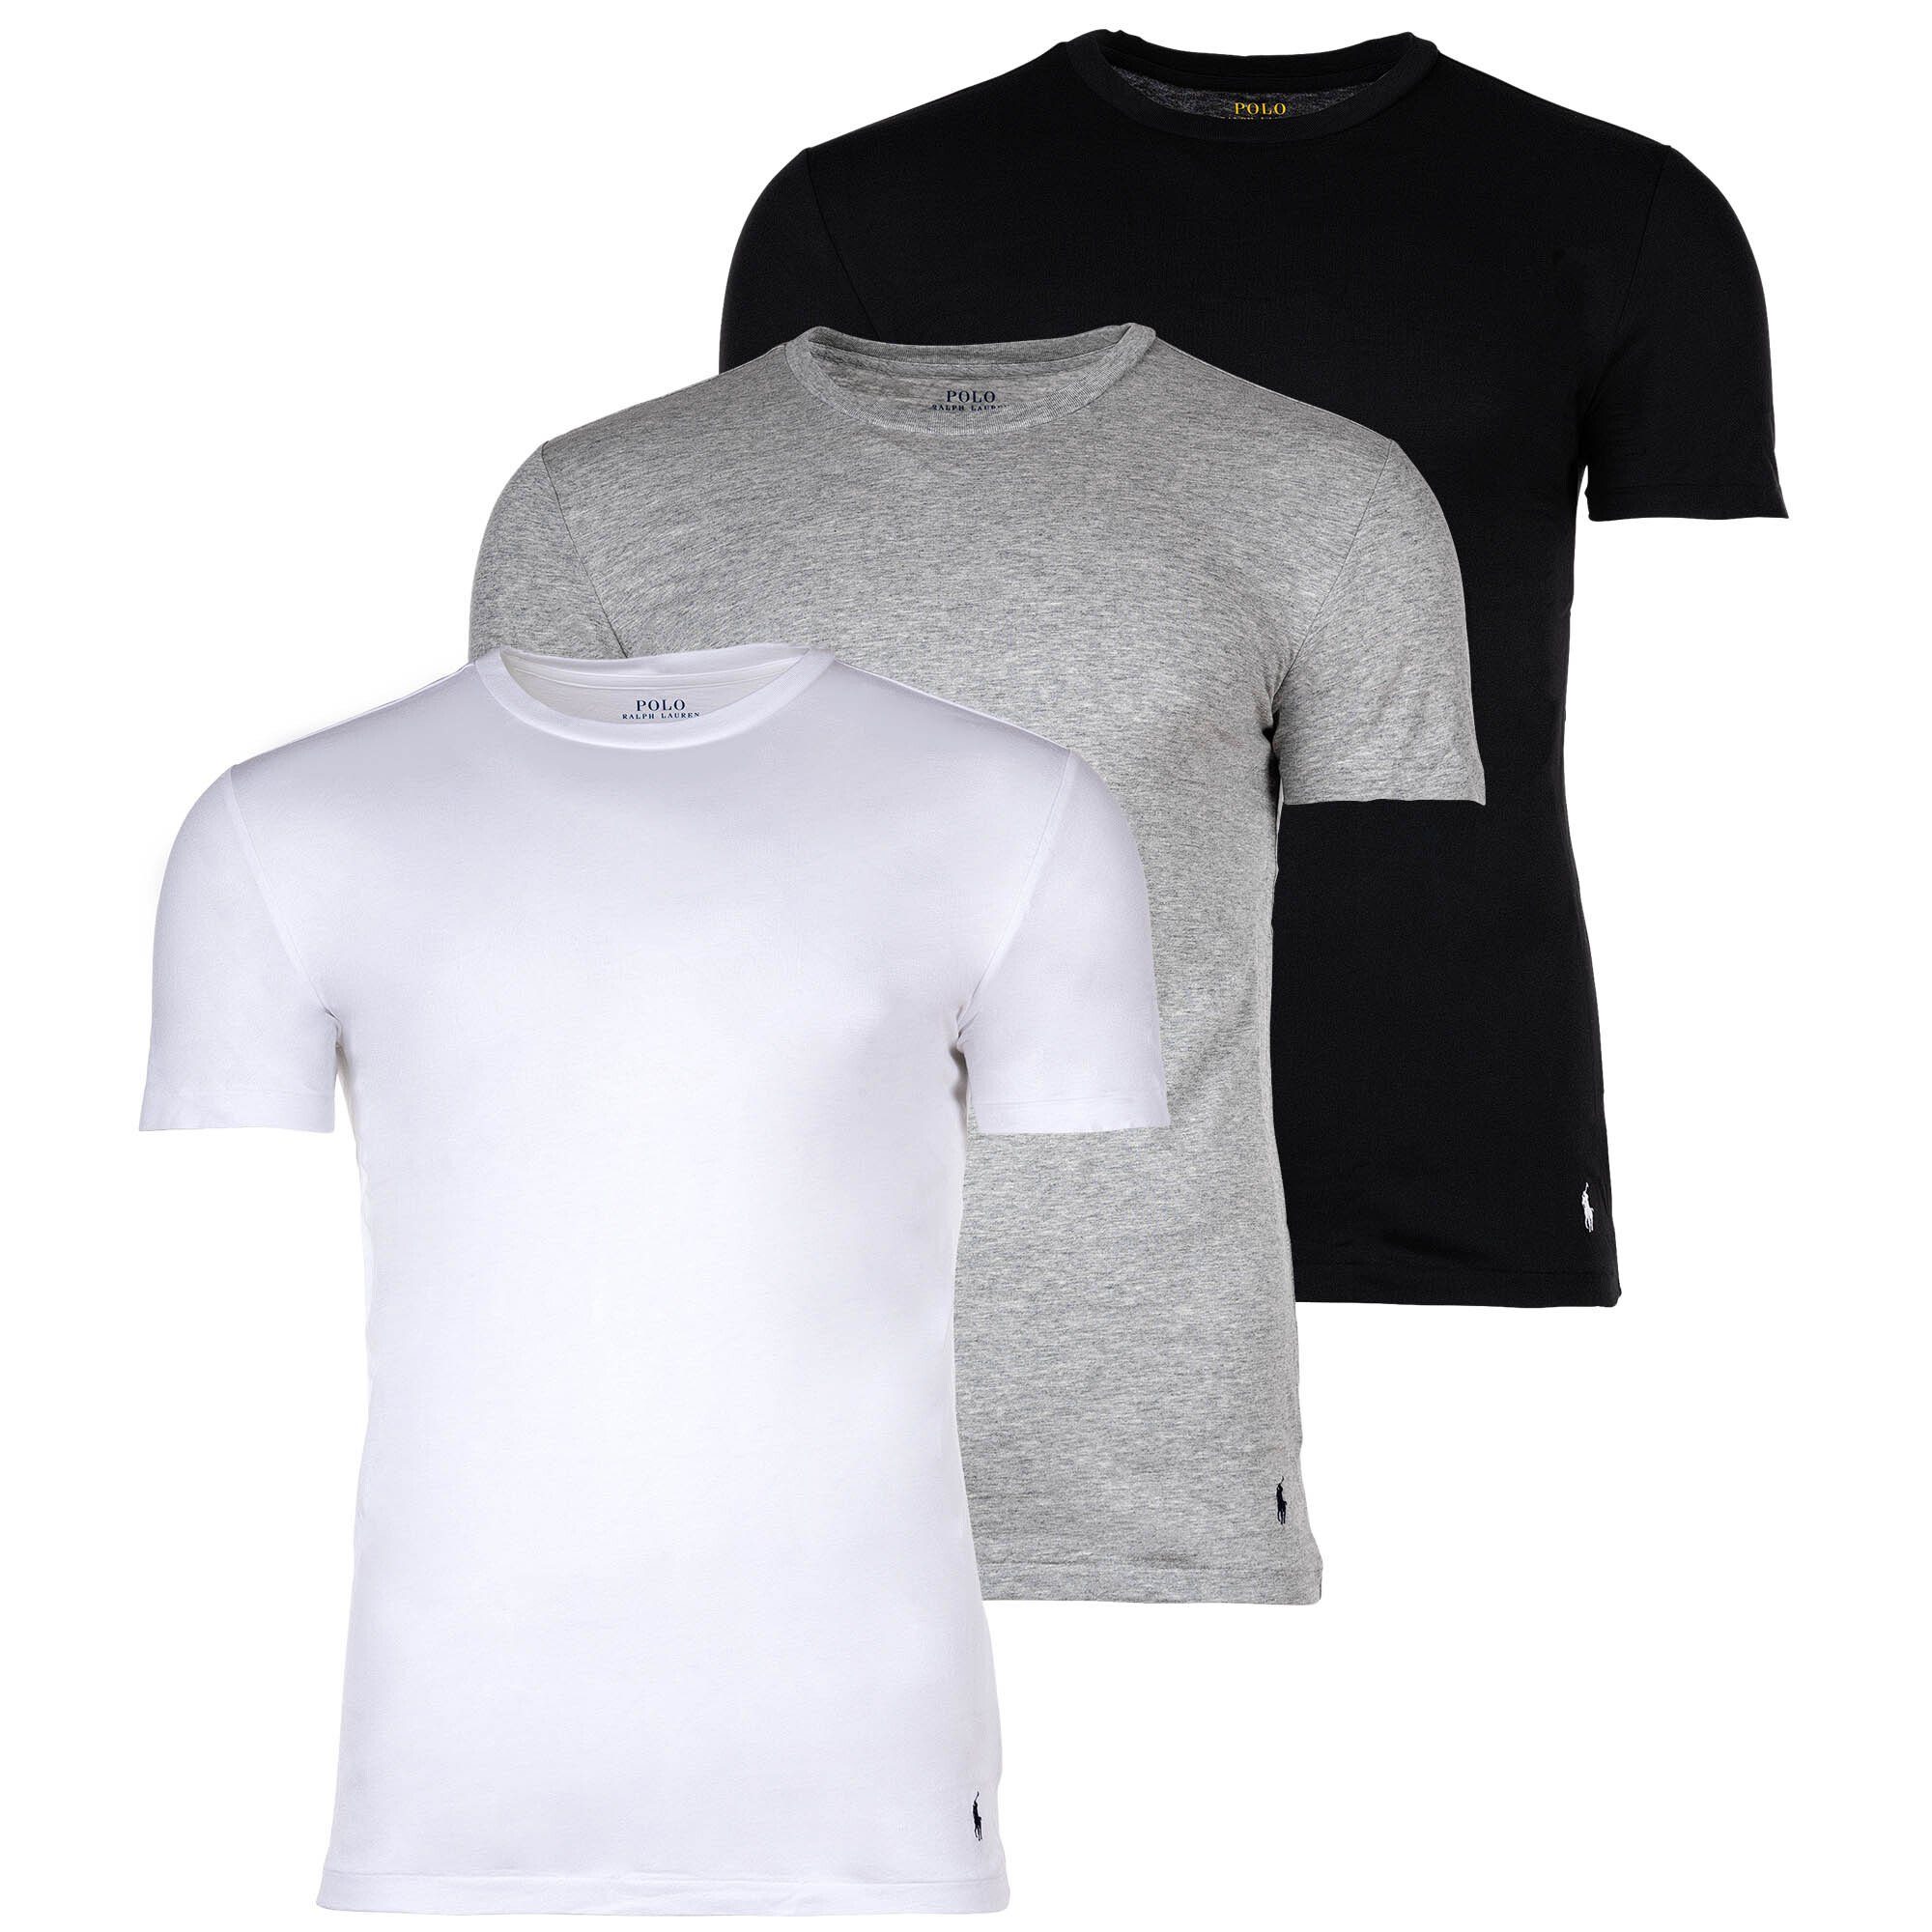 Polo Ralph Lauren T-Shirt Herren T-Shirts, 3er Pack - CREW 3-PACK-CREW Weiß/Grau/Schwarz